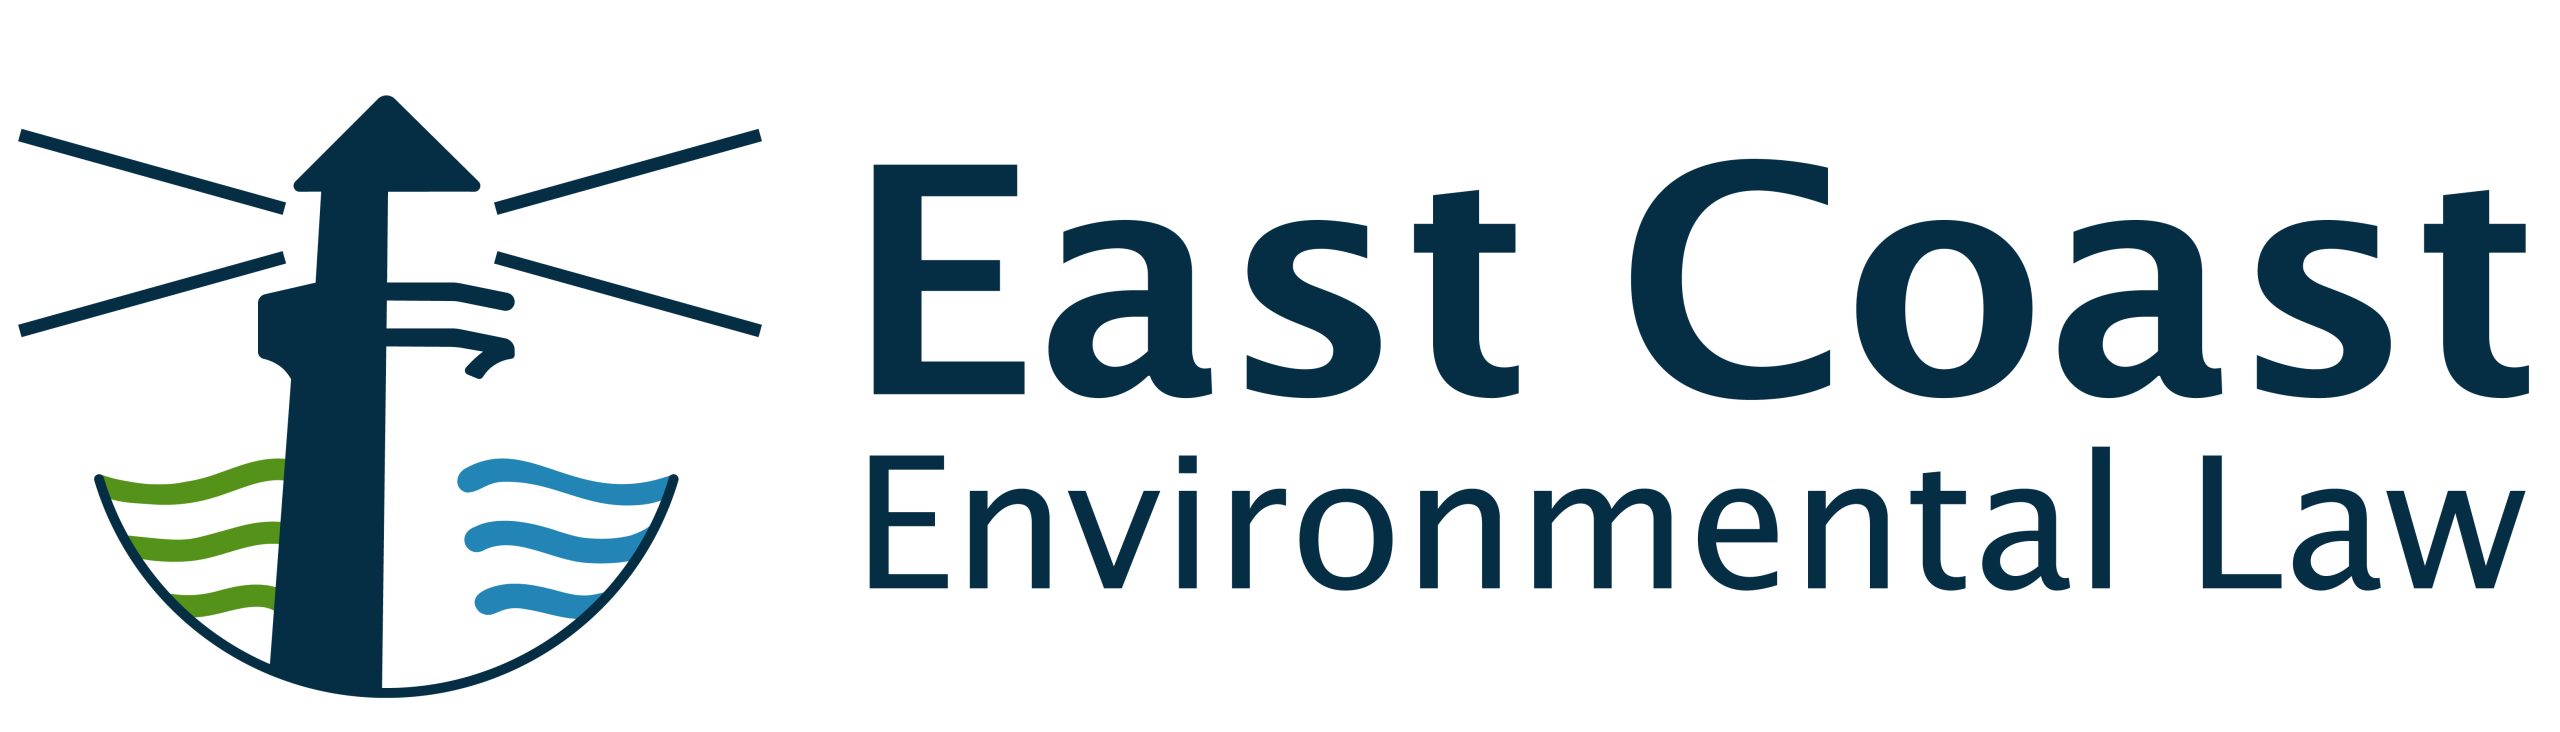 East Coast Environmental Law